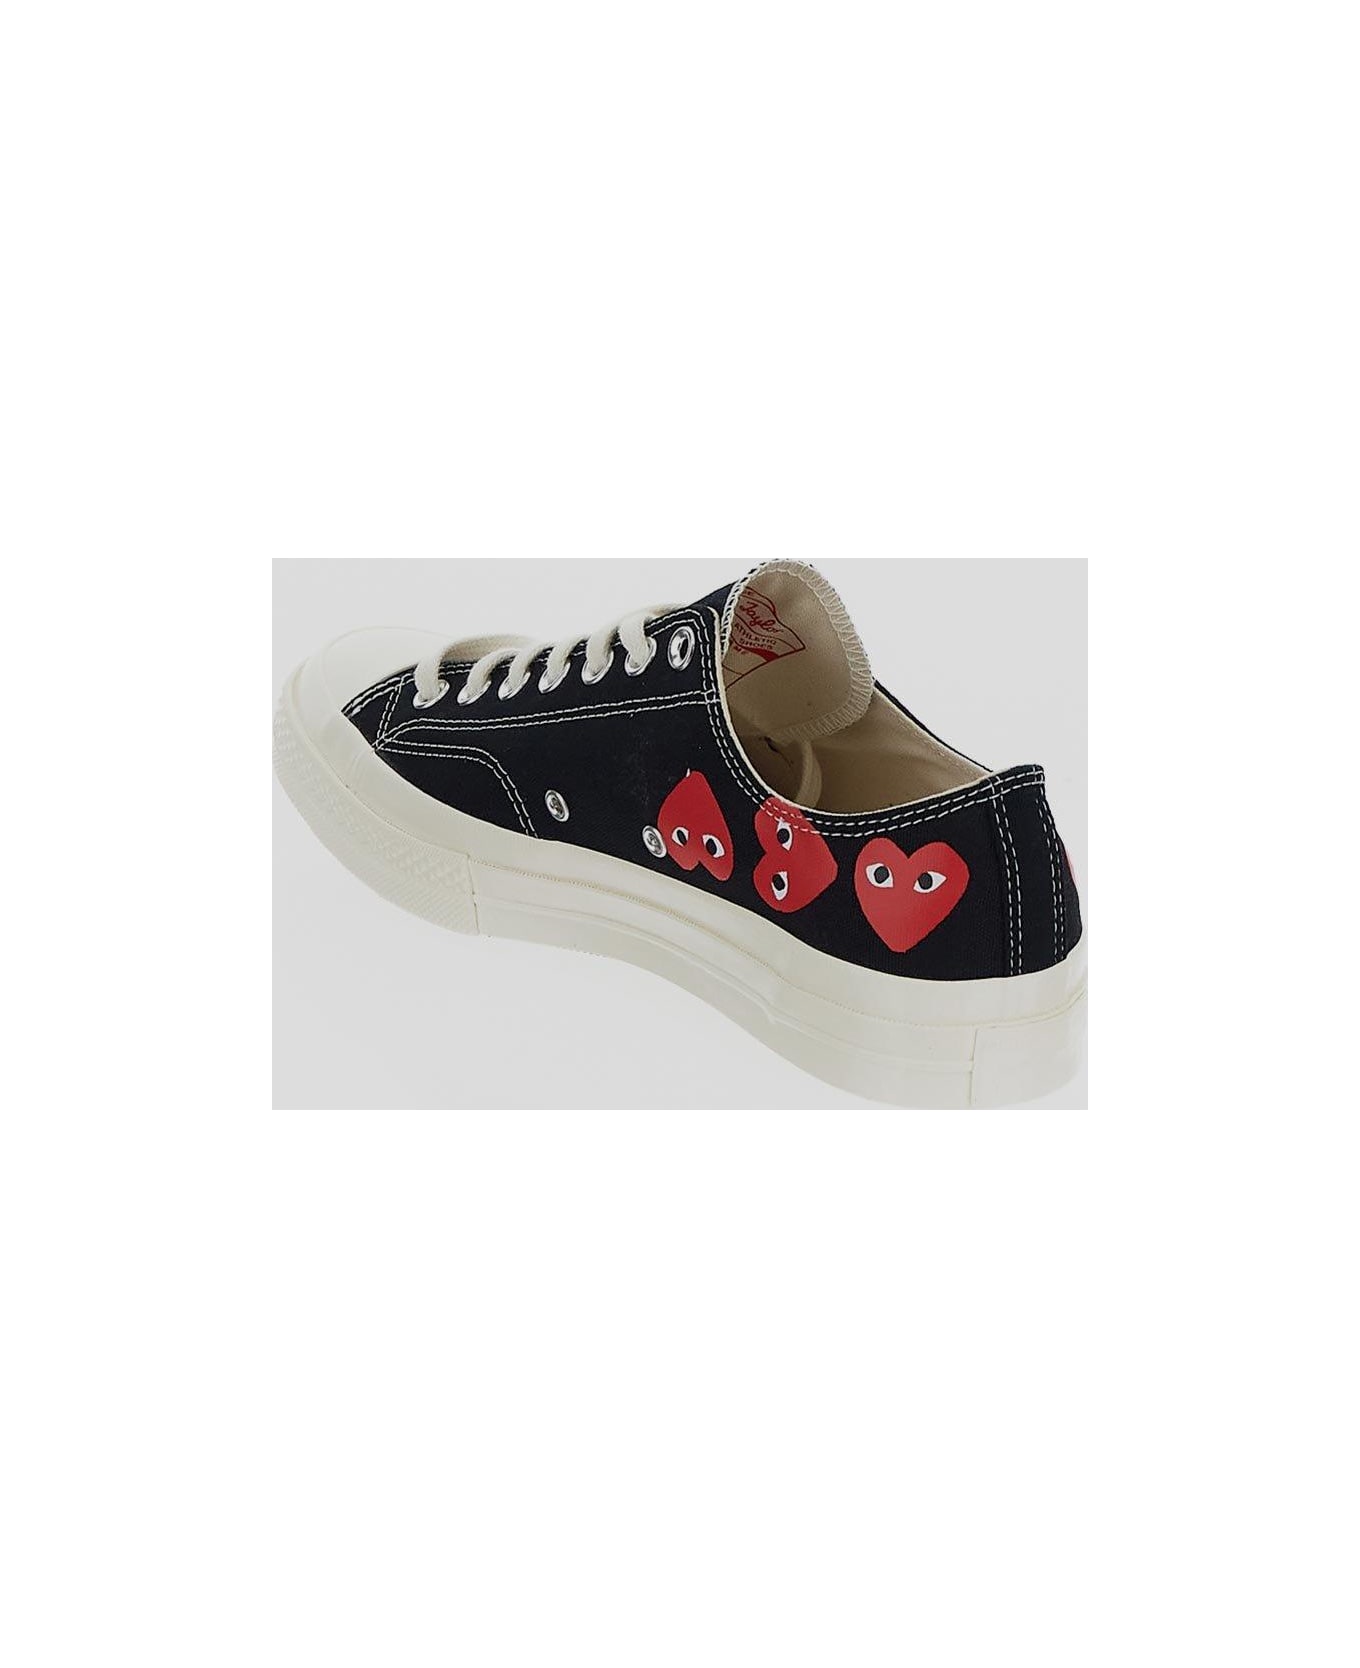 Comme des Garçons X Converse Chuck 70 Heart Printed Lace-up Sneakers - Black